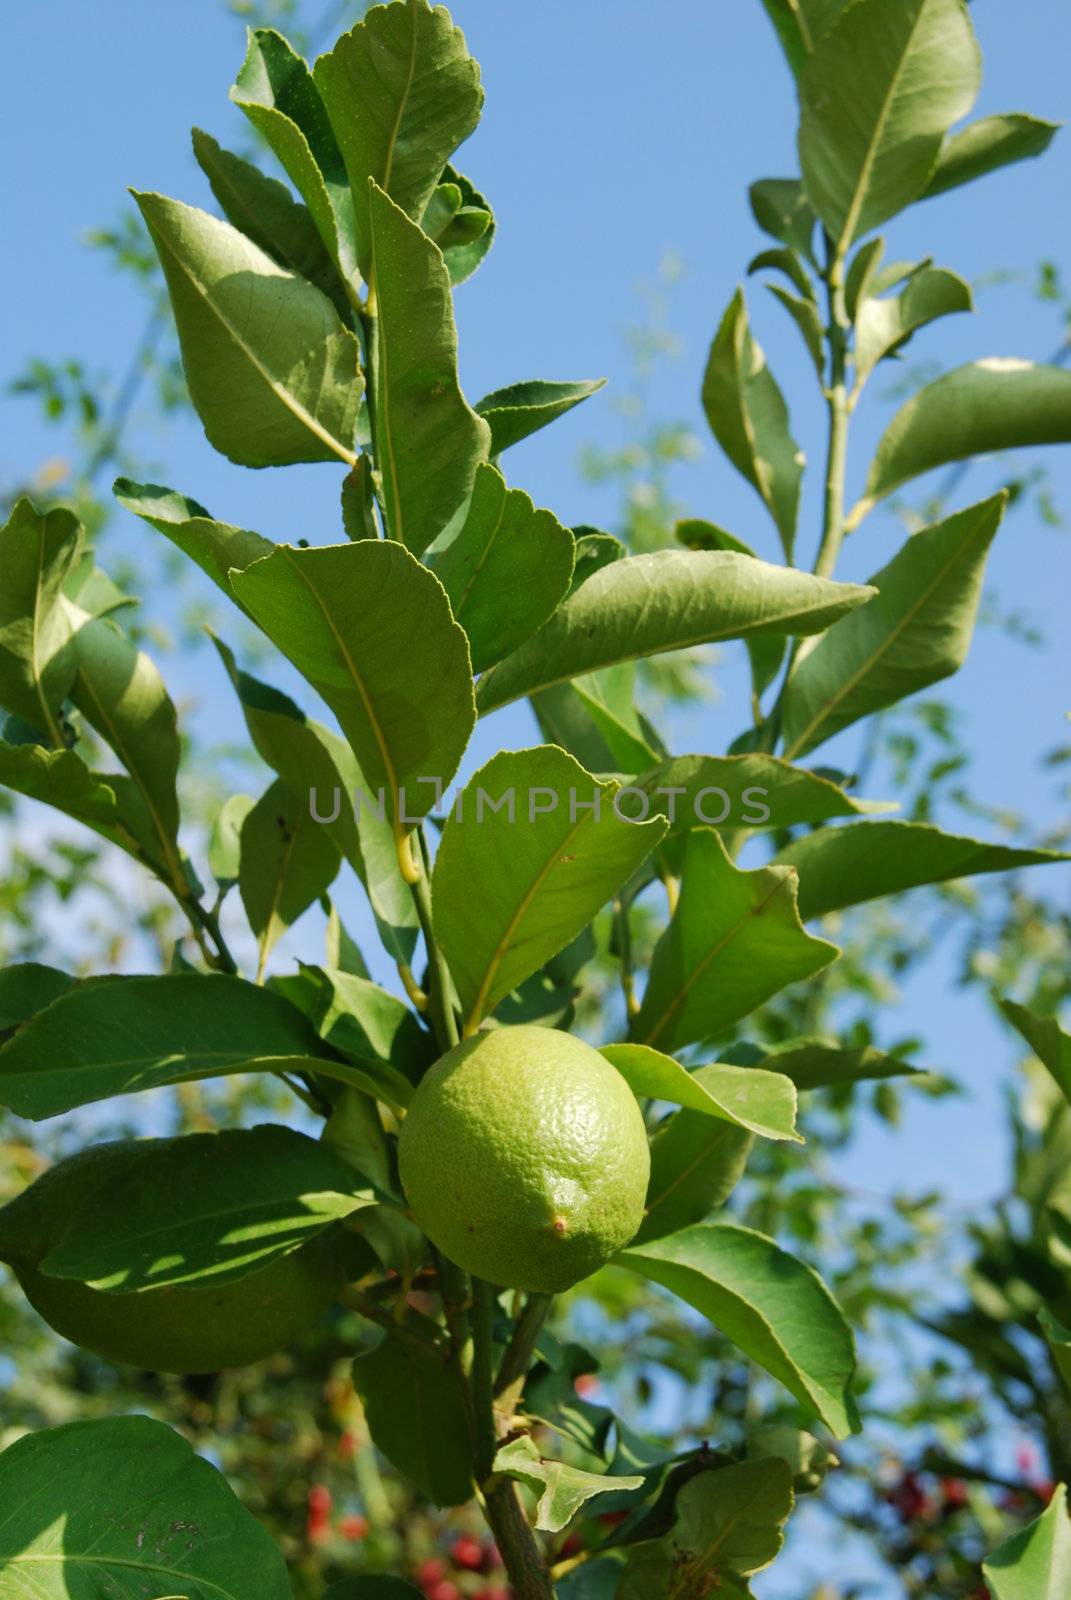 photo of a lemon tree branch with a green lemon